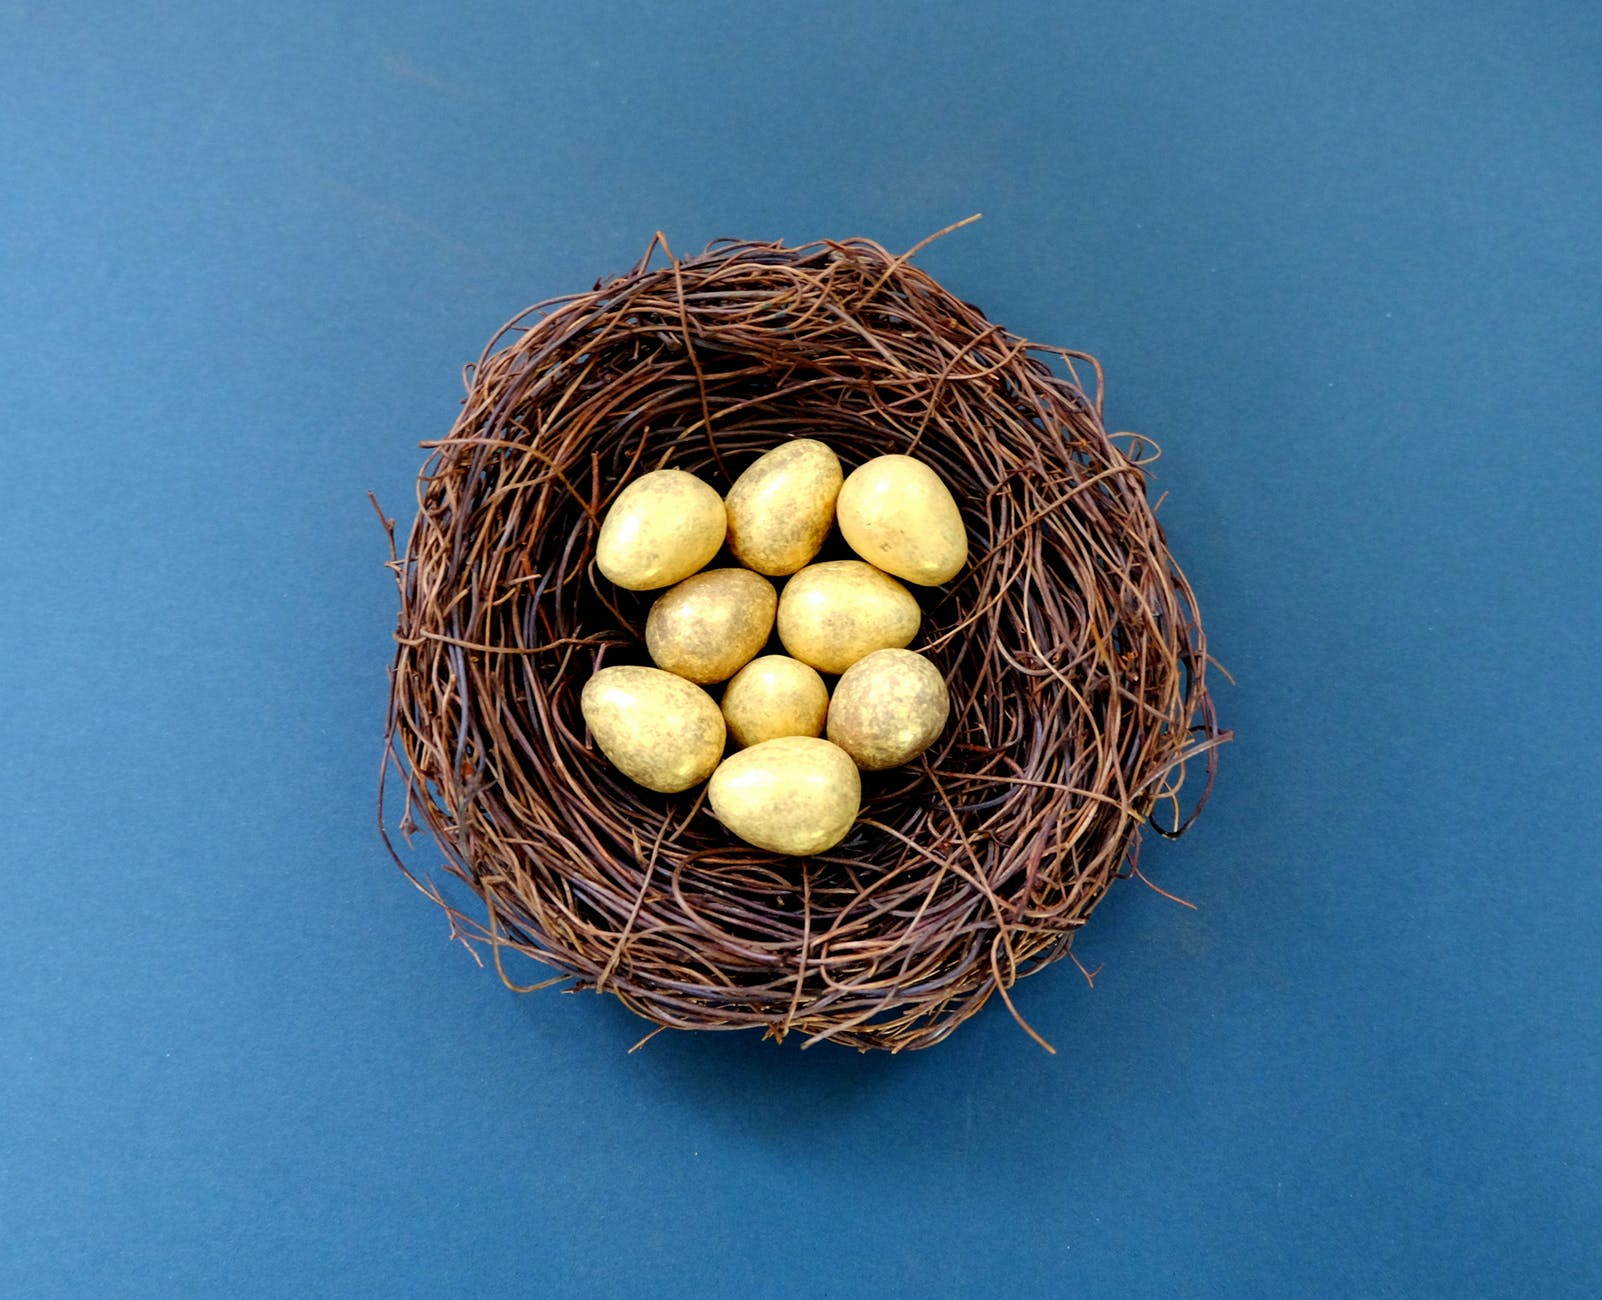 Bird eggs in a basket